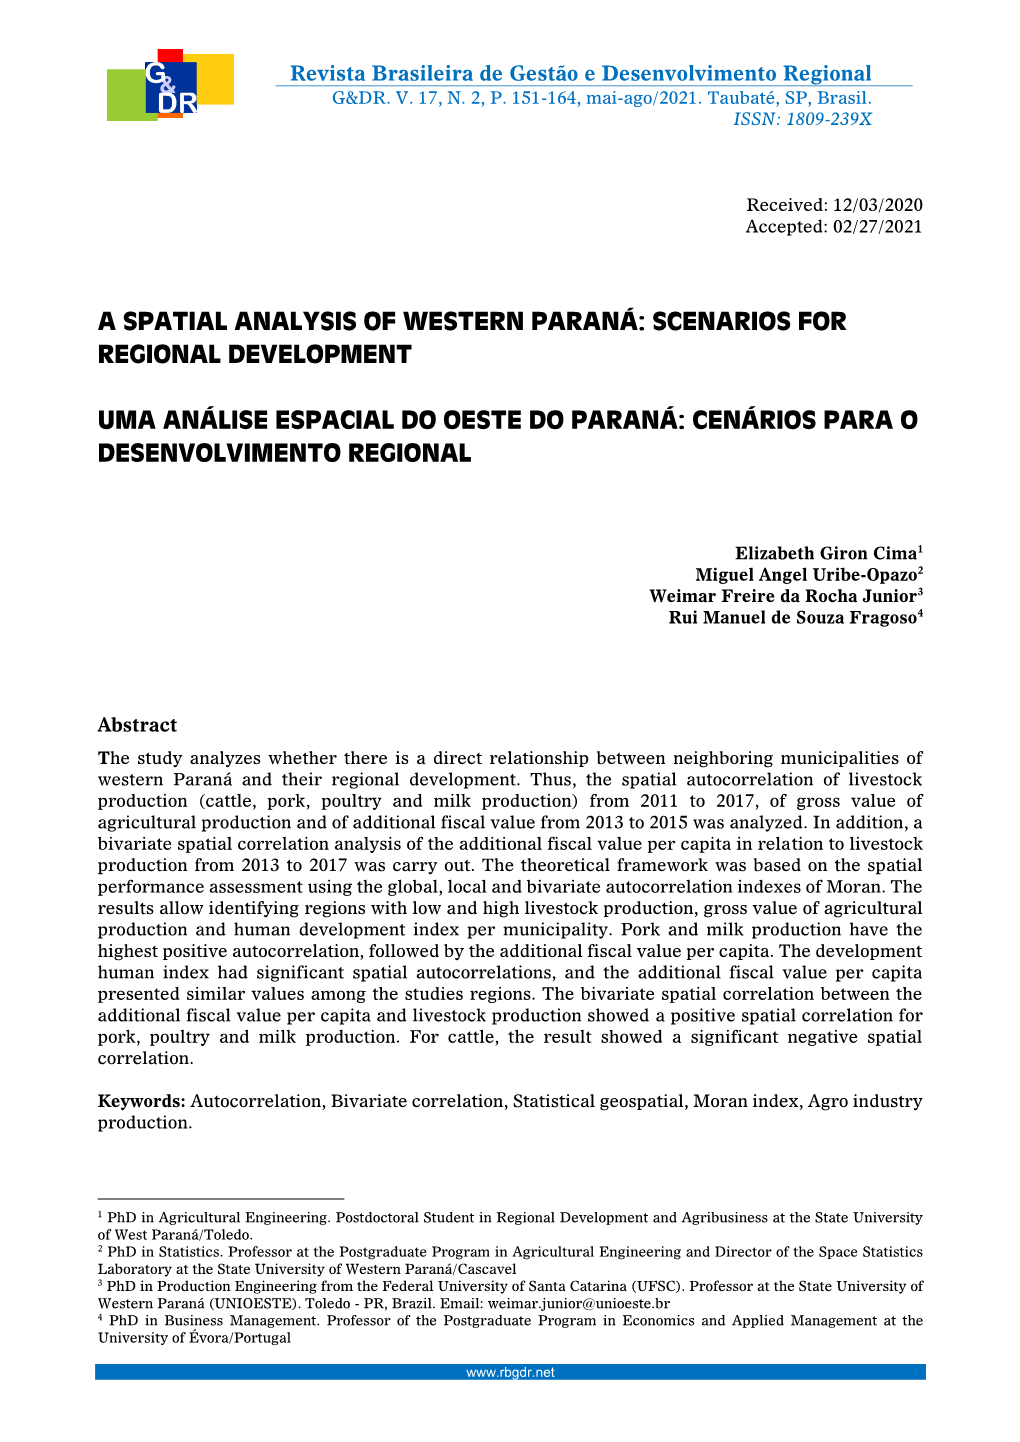 A Spatial Analysis of Western Paraná: Scenarios for Regional Development